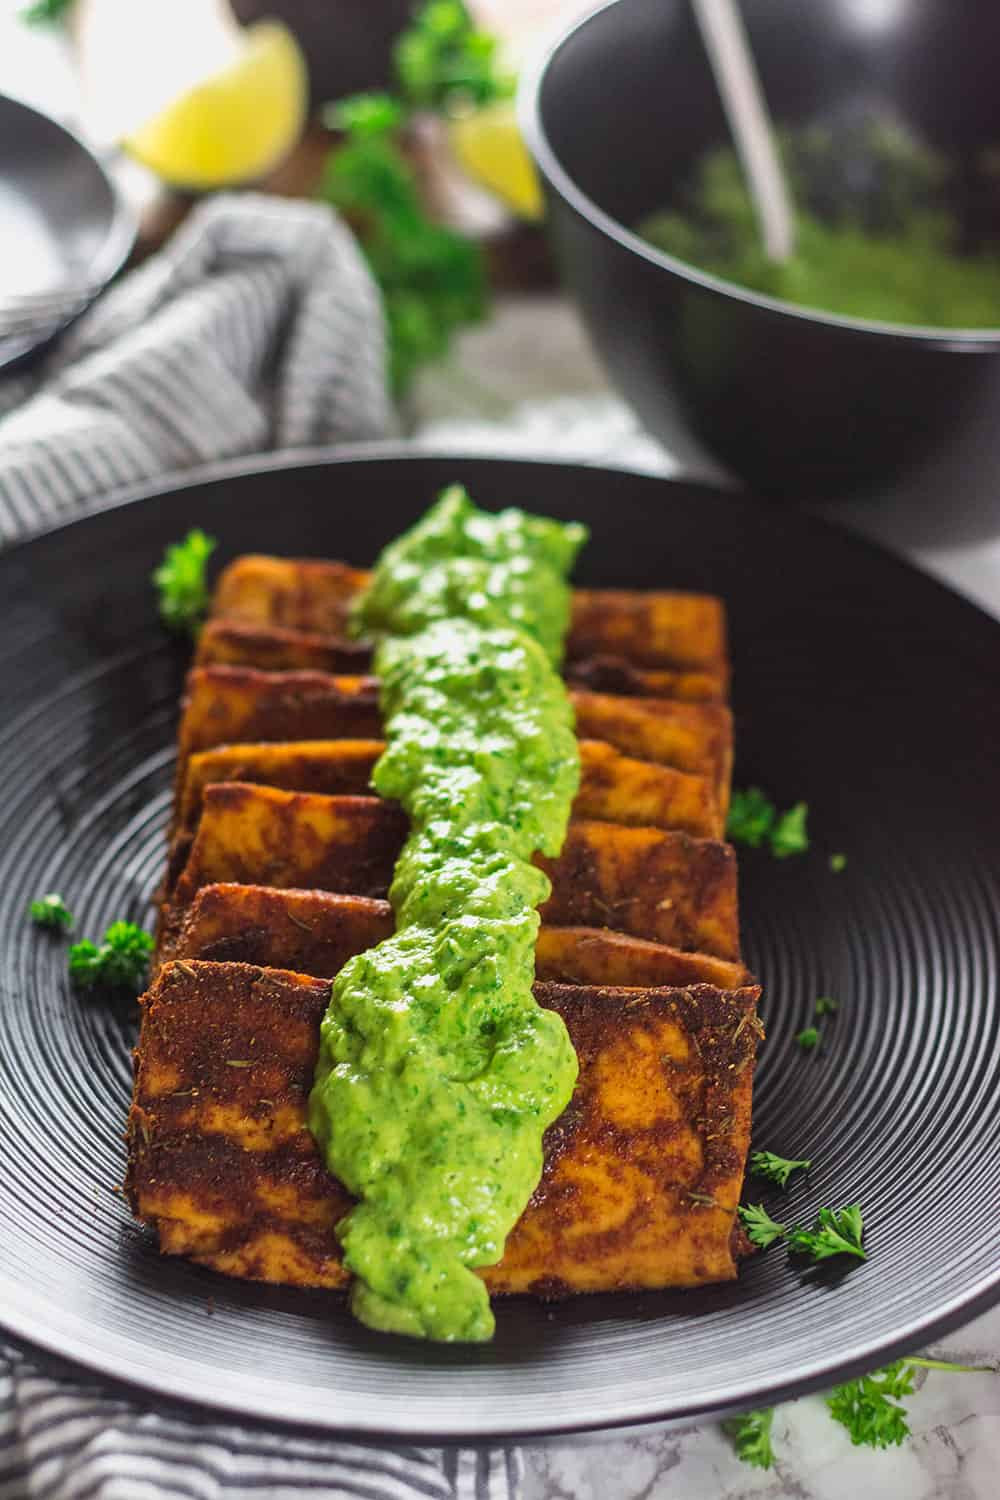 Vegan Tofu Recipes
 The Best 34 Vegan Tofu Recipes Simple and Healthy